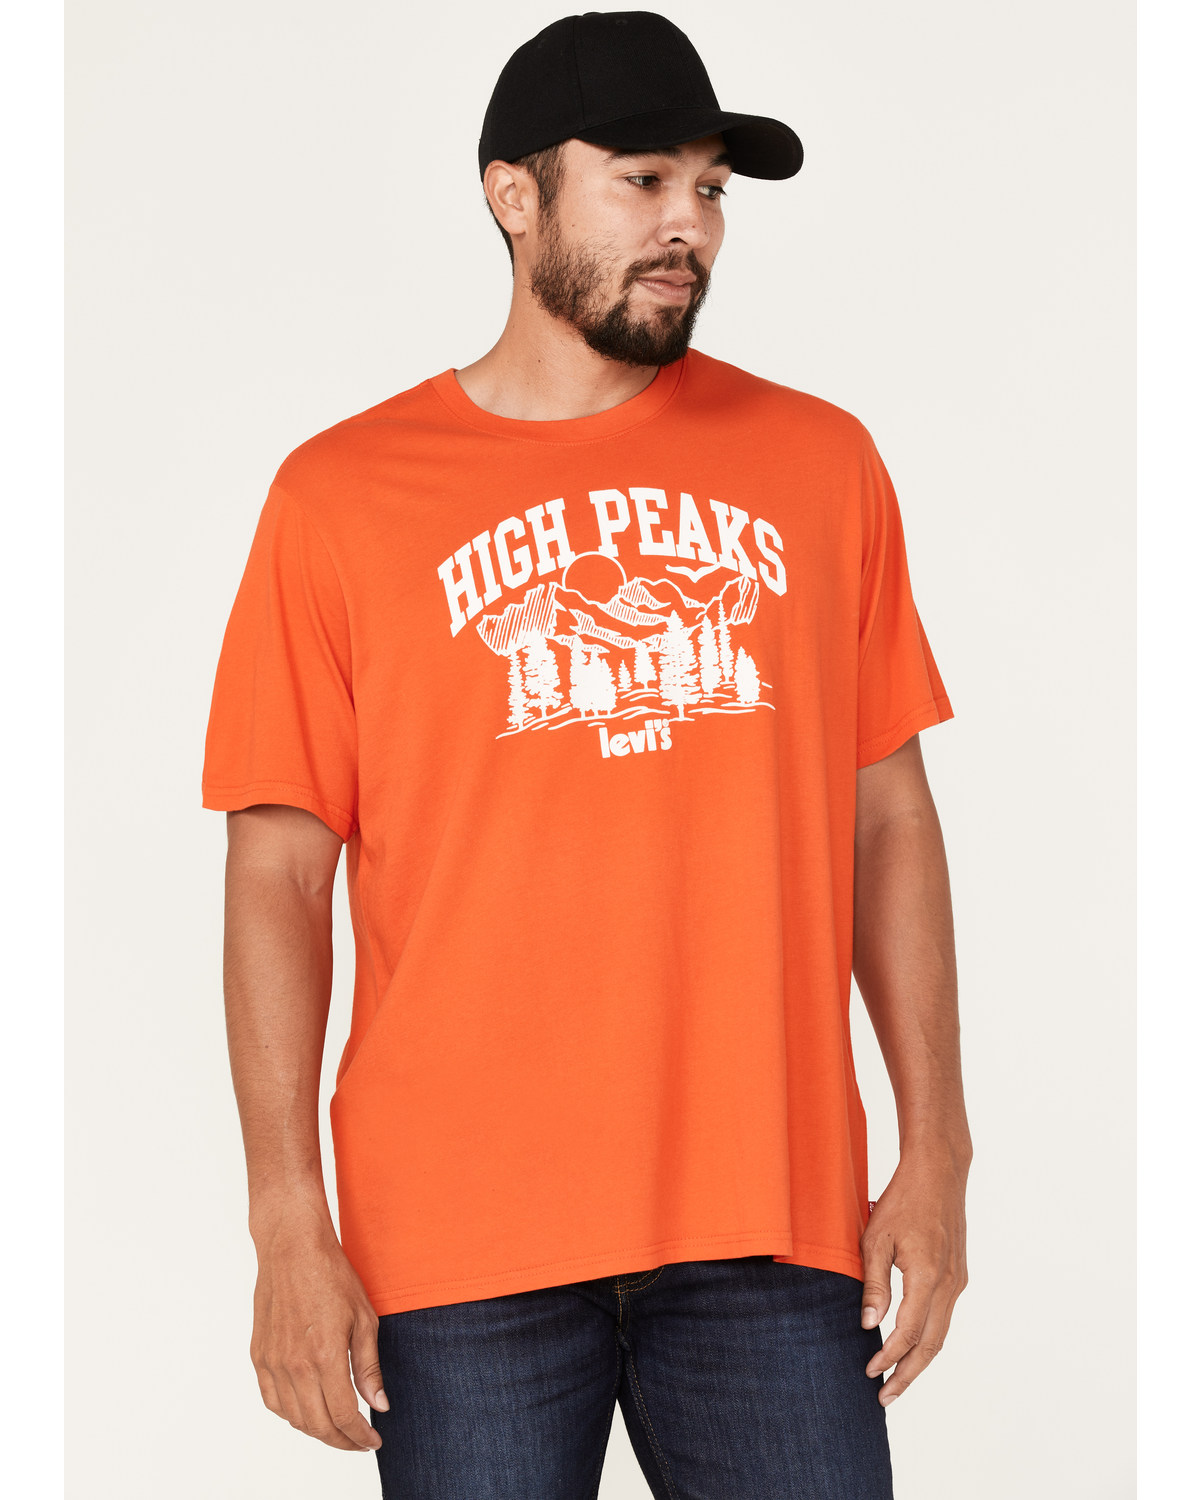 Levi's Men's High Peaks Logo Graphic T-Shirt